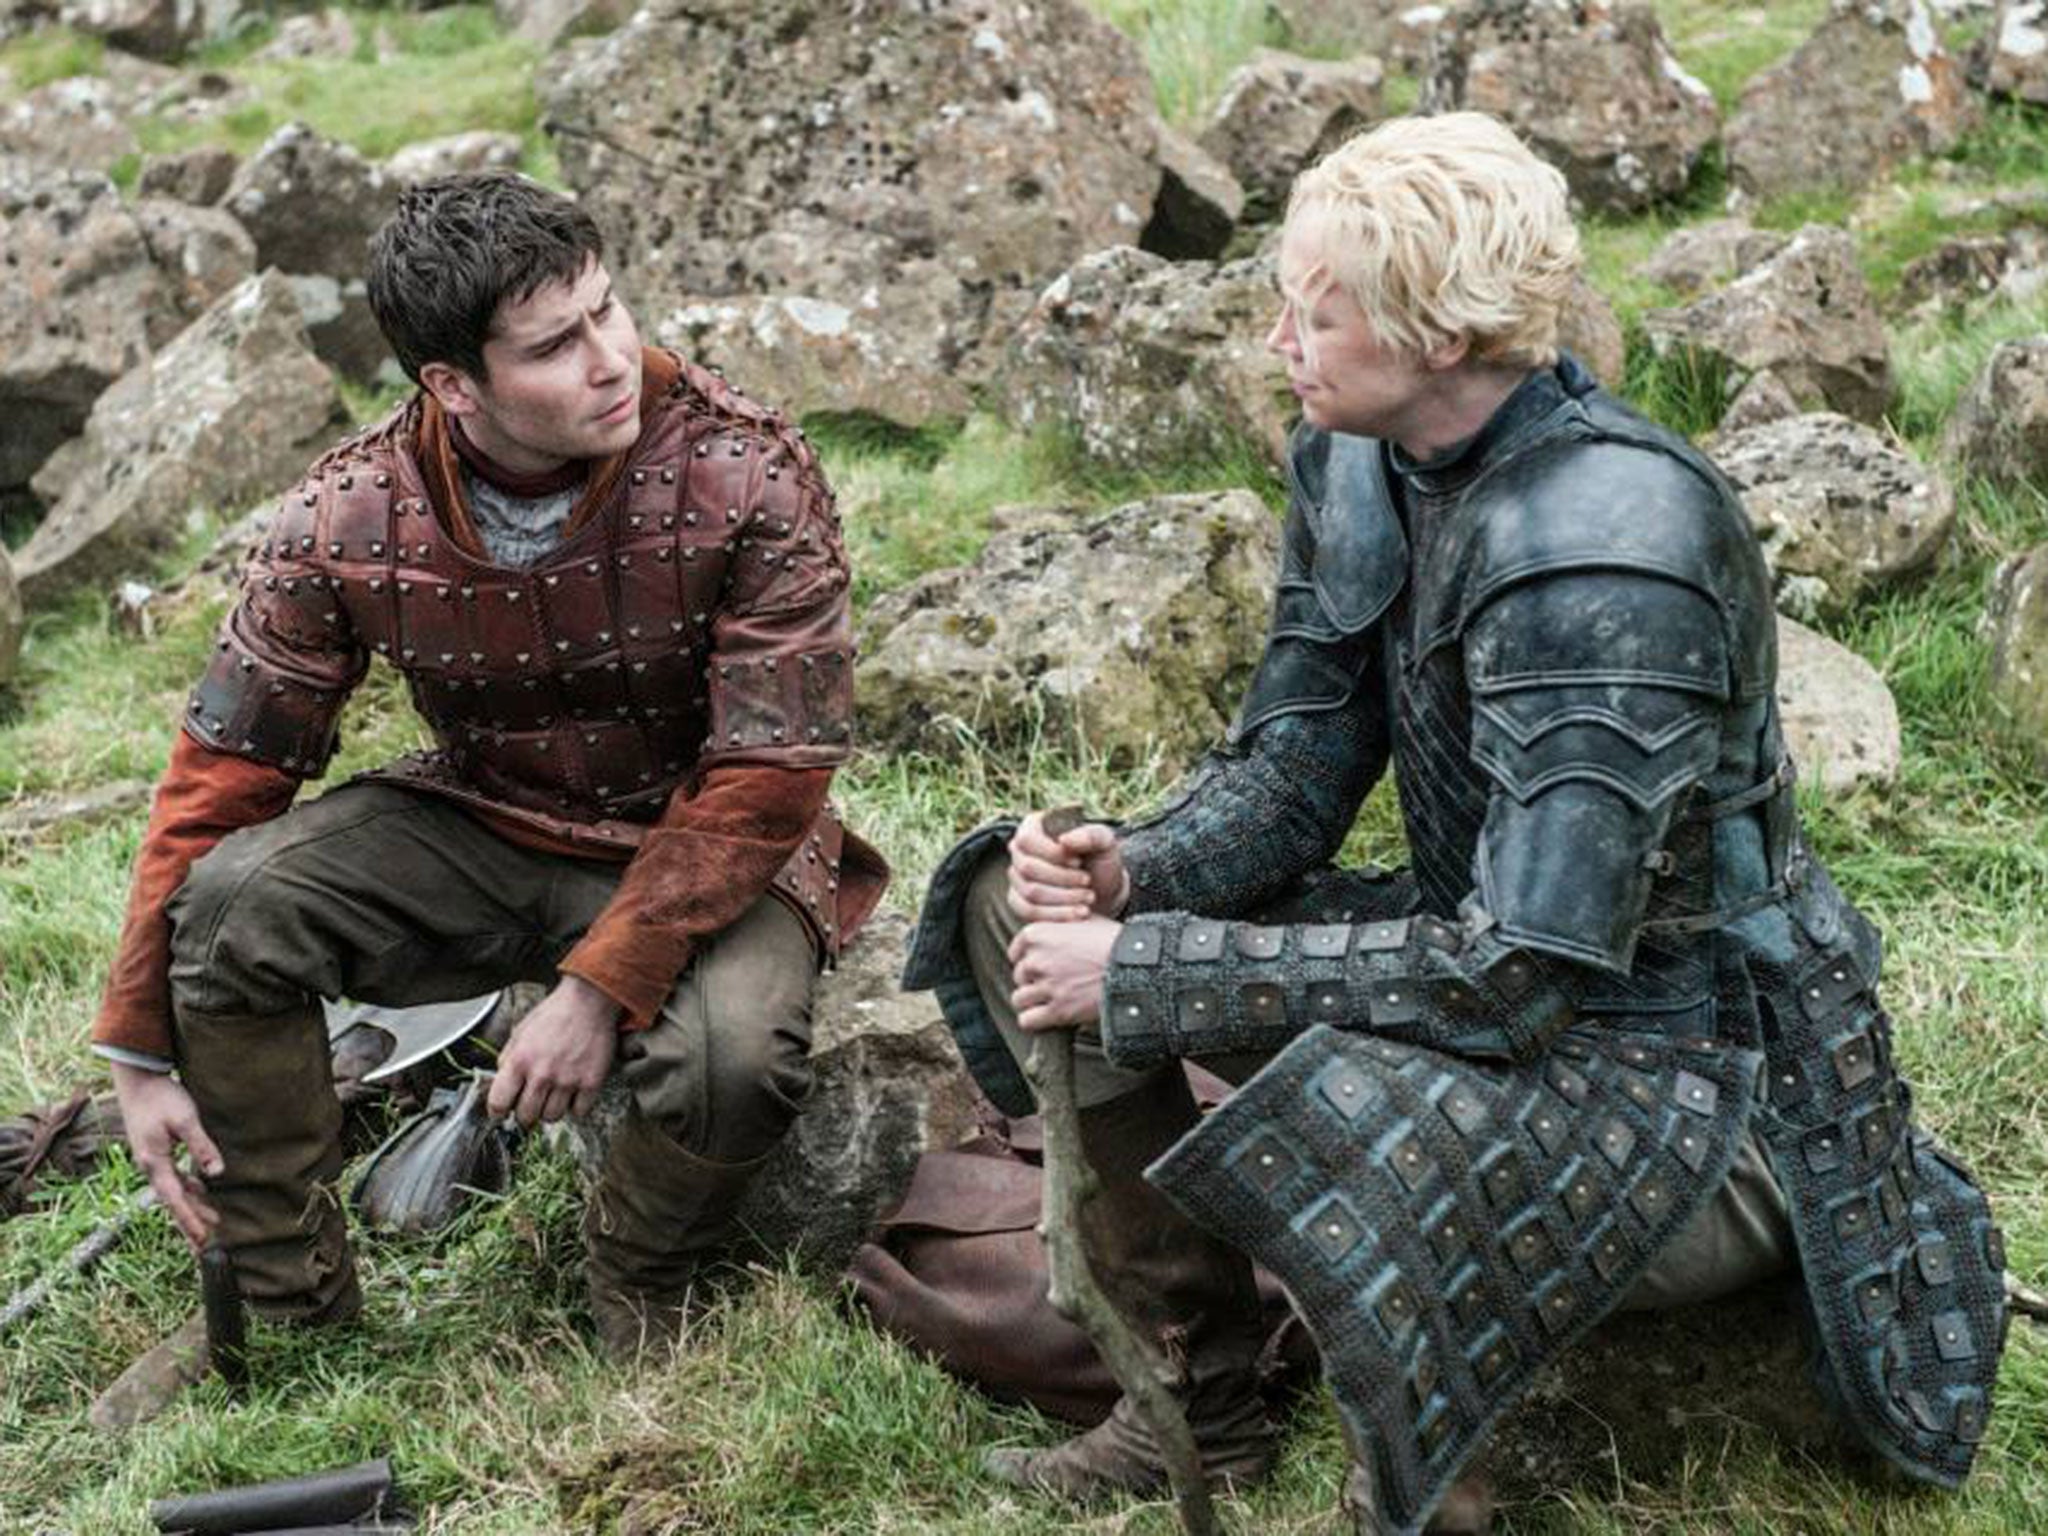 Daniel Portman as Podrick Payne and Gwendoline Christie as Brienne of Tarth in Game of Thrones